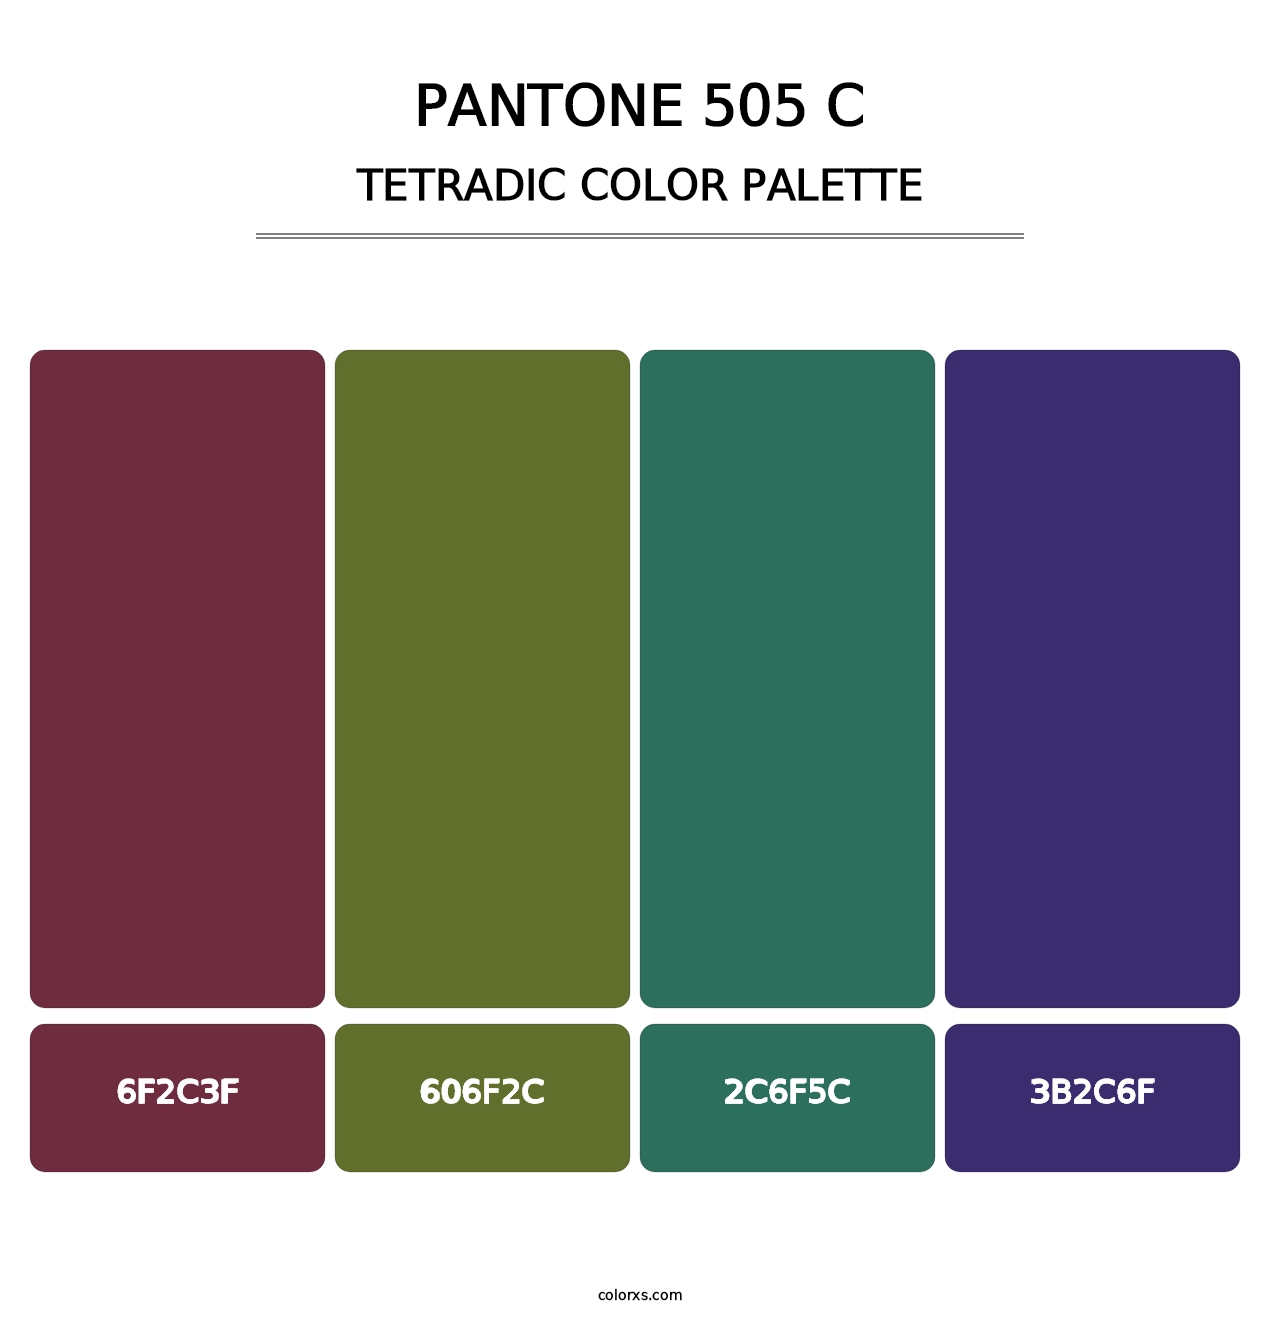 PANTONE 505 C - Tetradic Color Palette